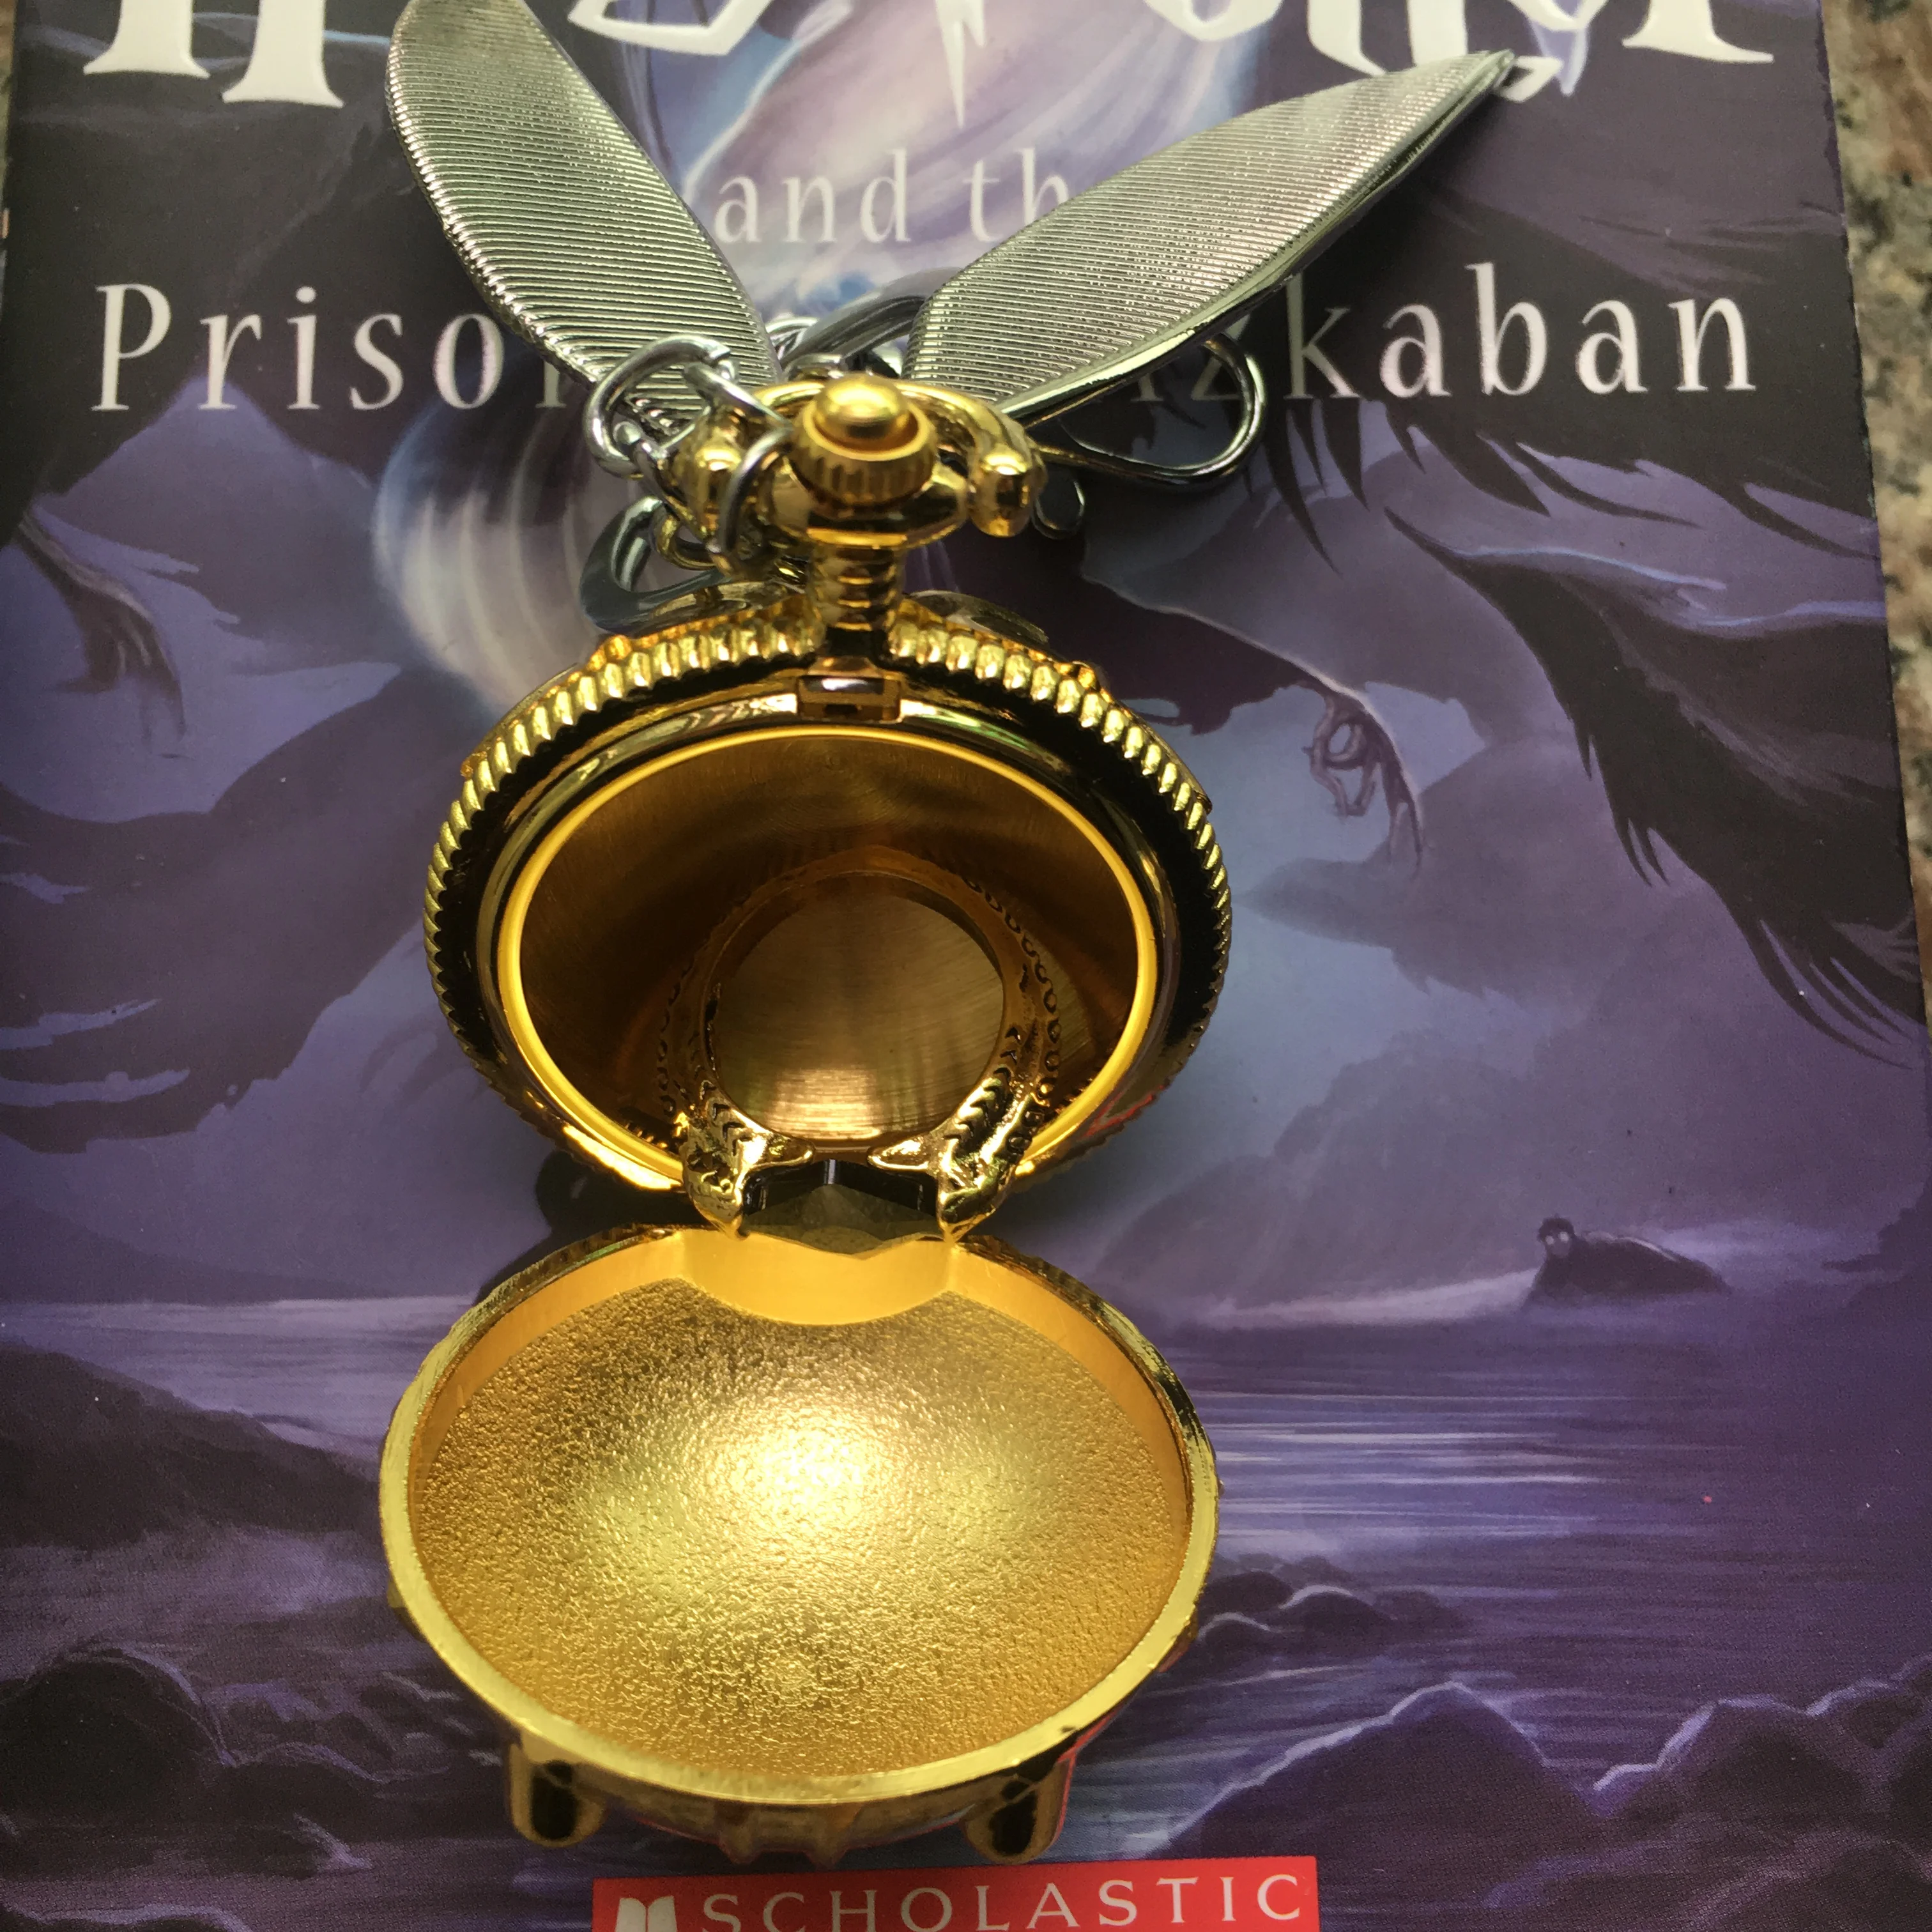 

Golden Snitch Keychain Necklace Resurrection Stone Ring Set Wizard Quidditch Cosplay Kid's Halloween Christmas Birthday Gift